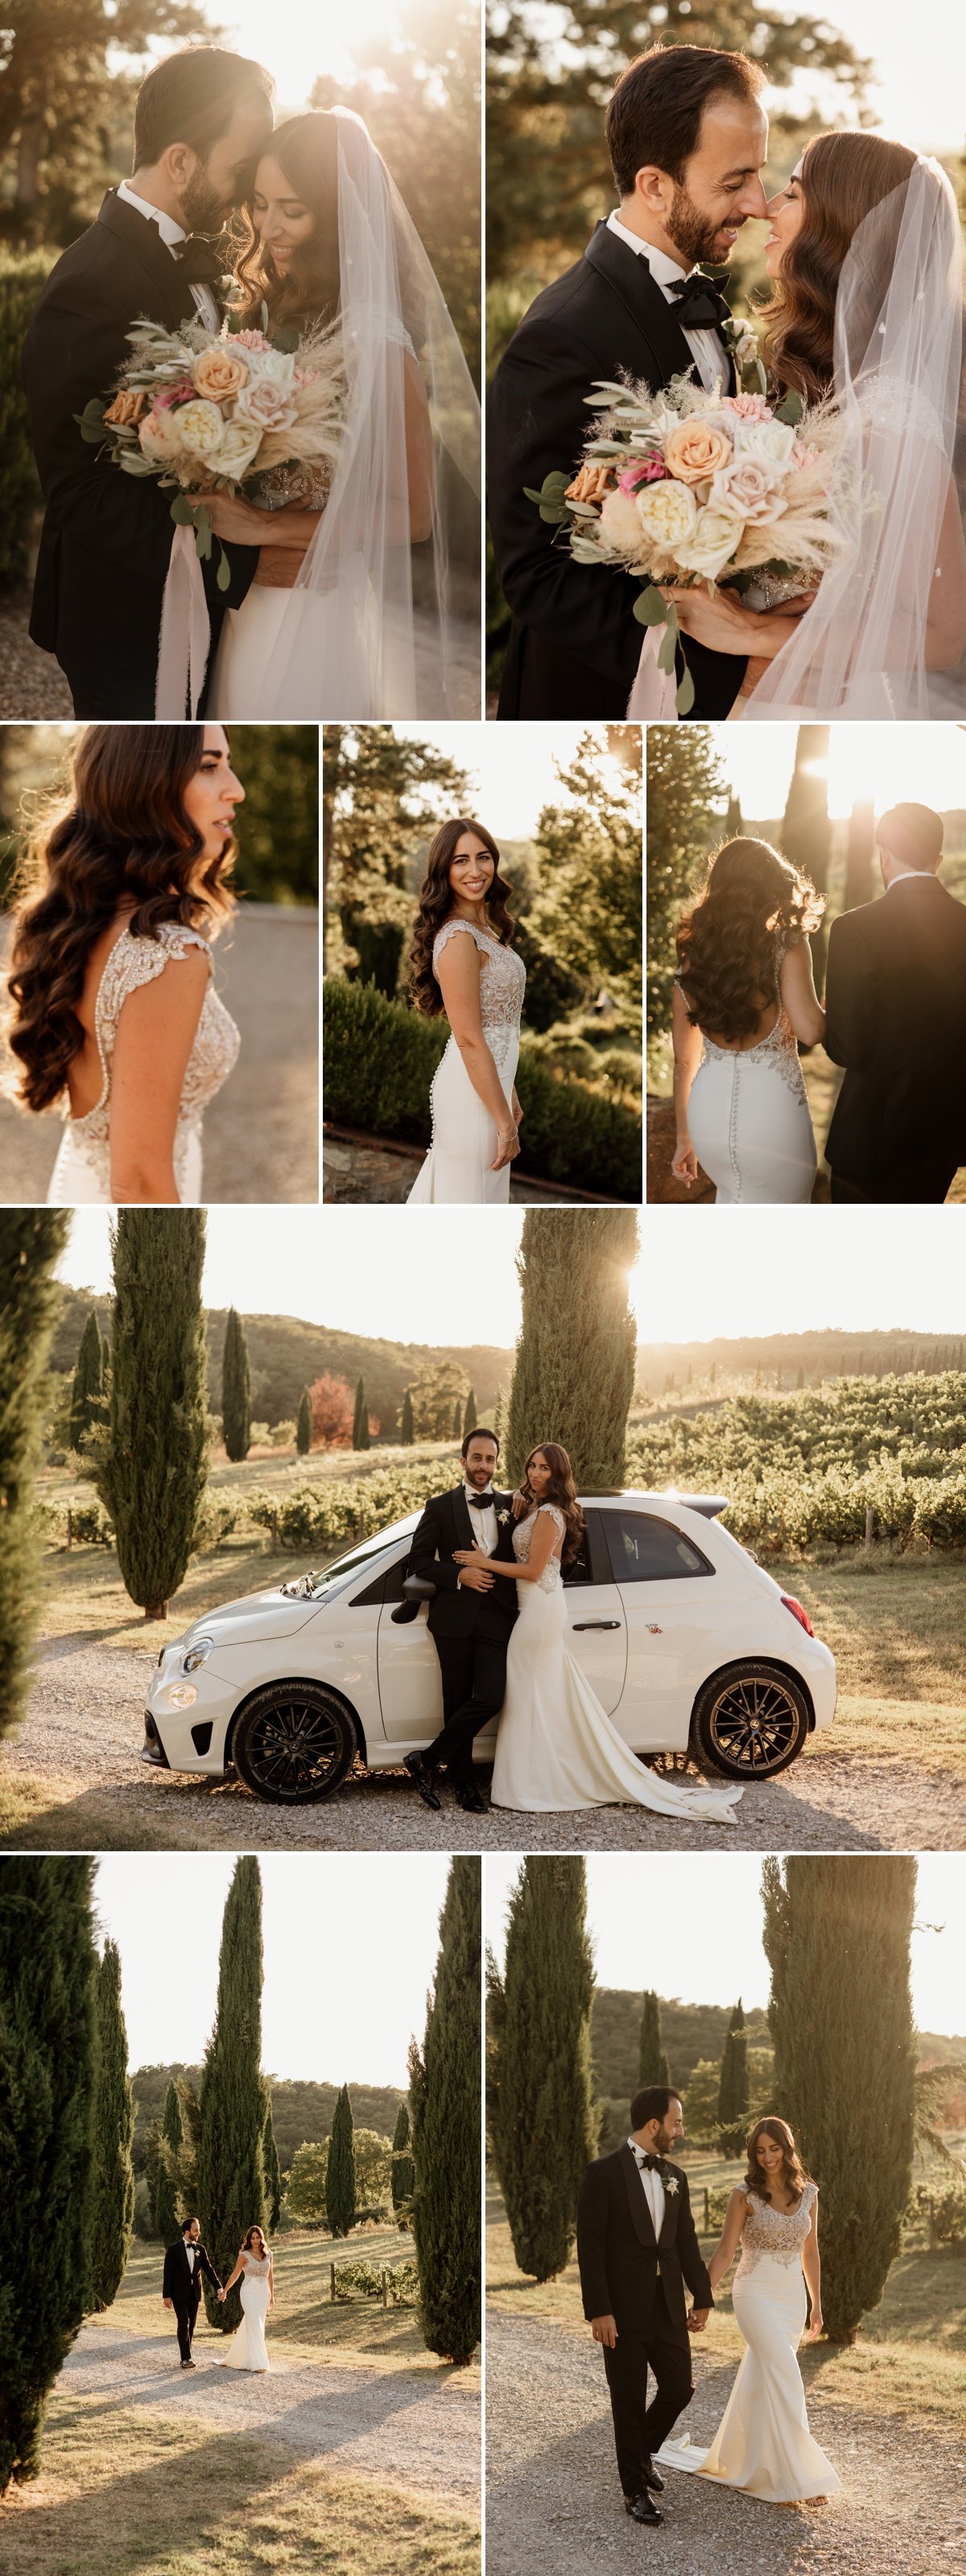 tuscany-wedding-dallk-16.jpg